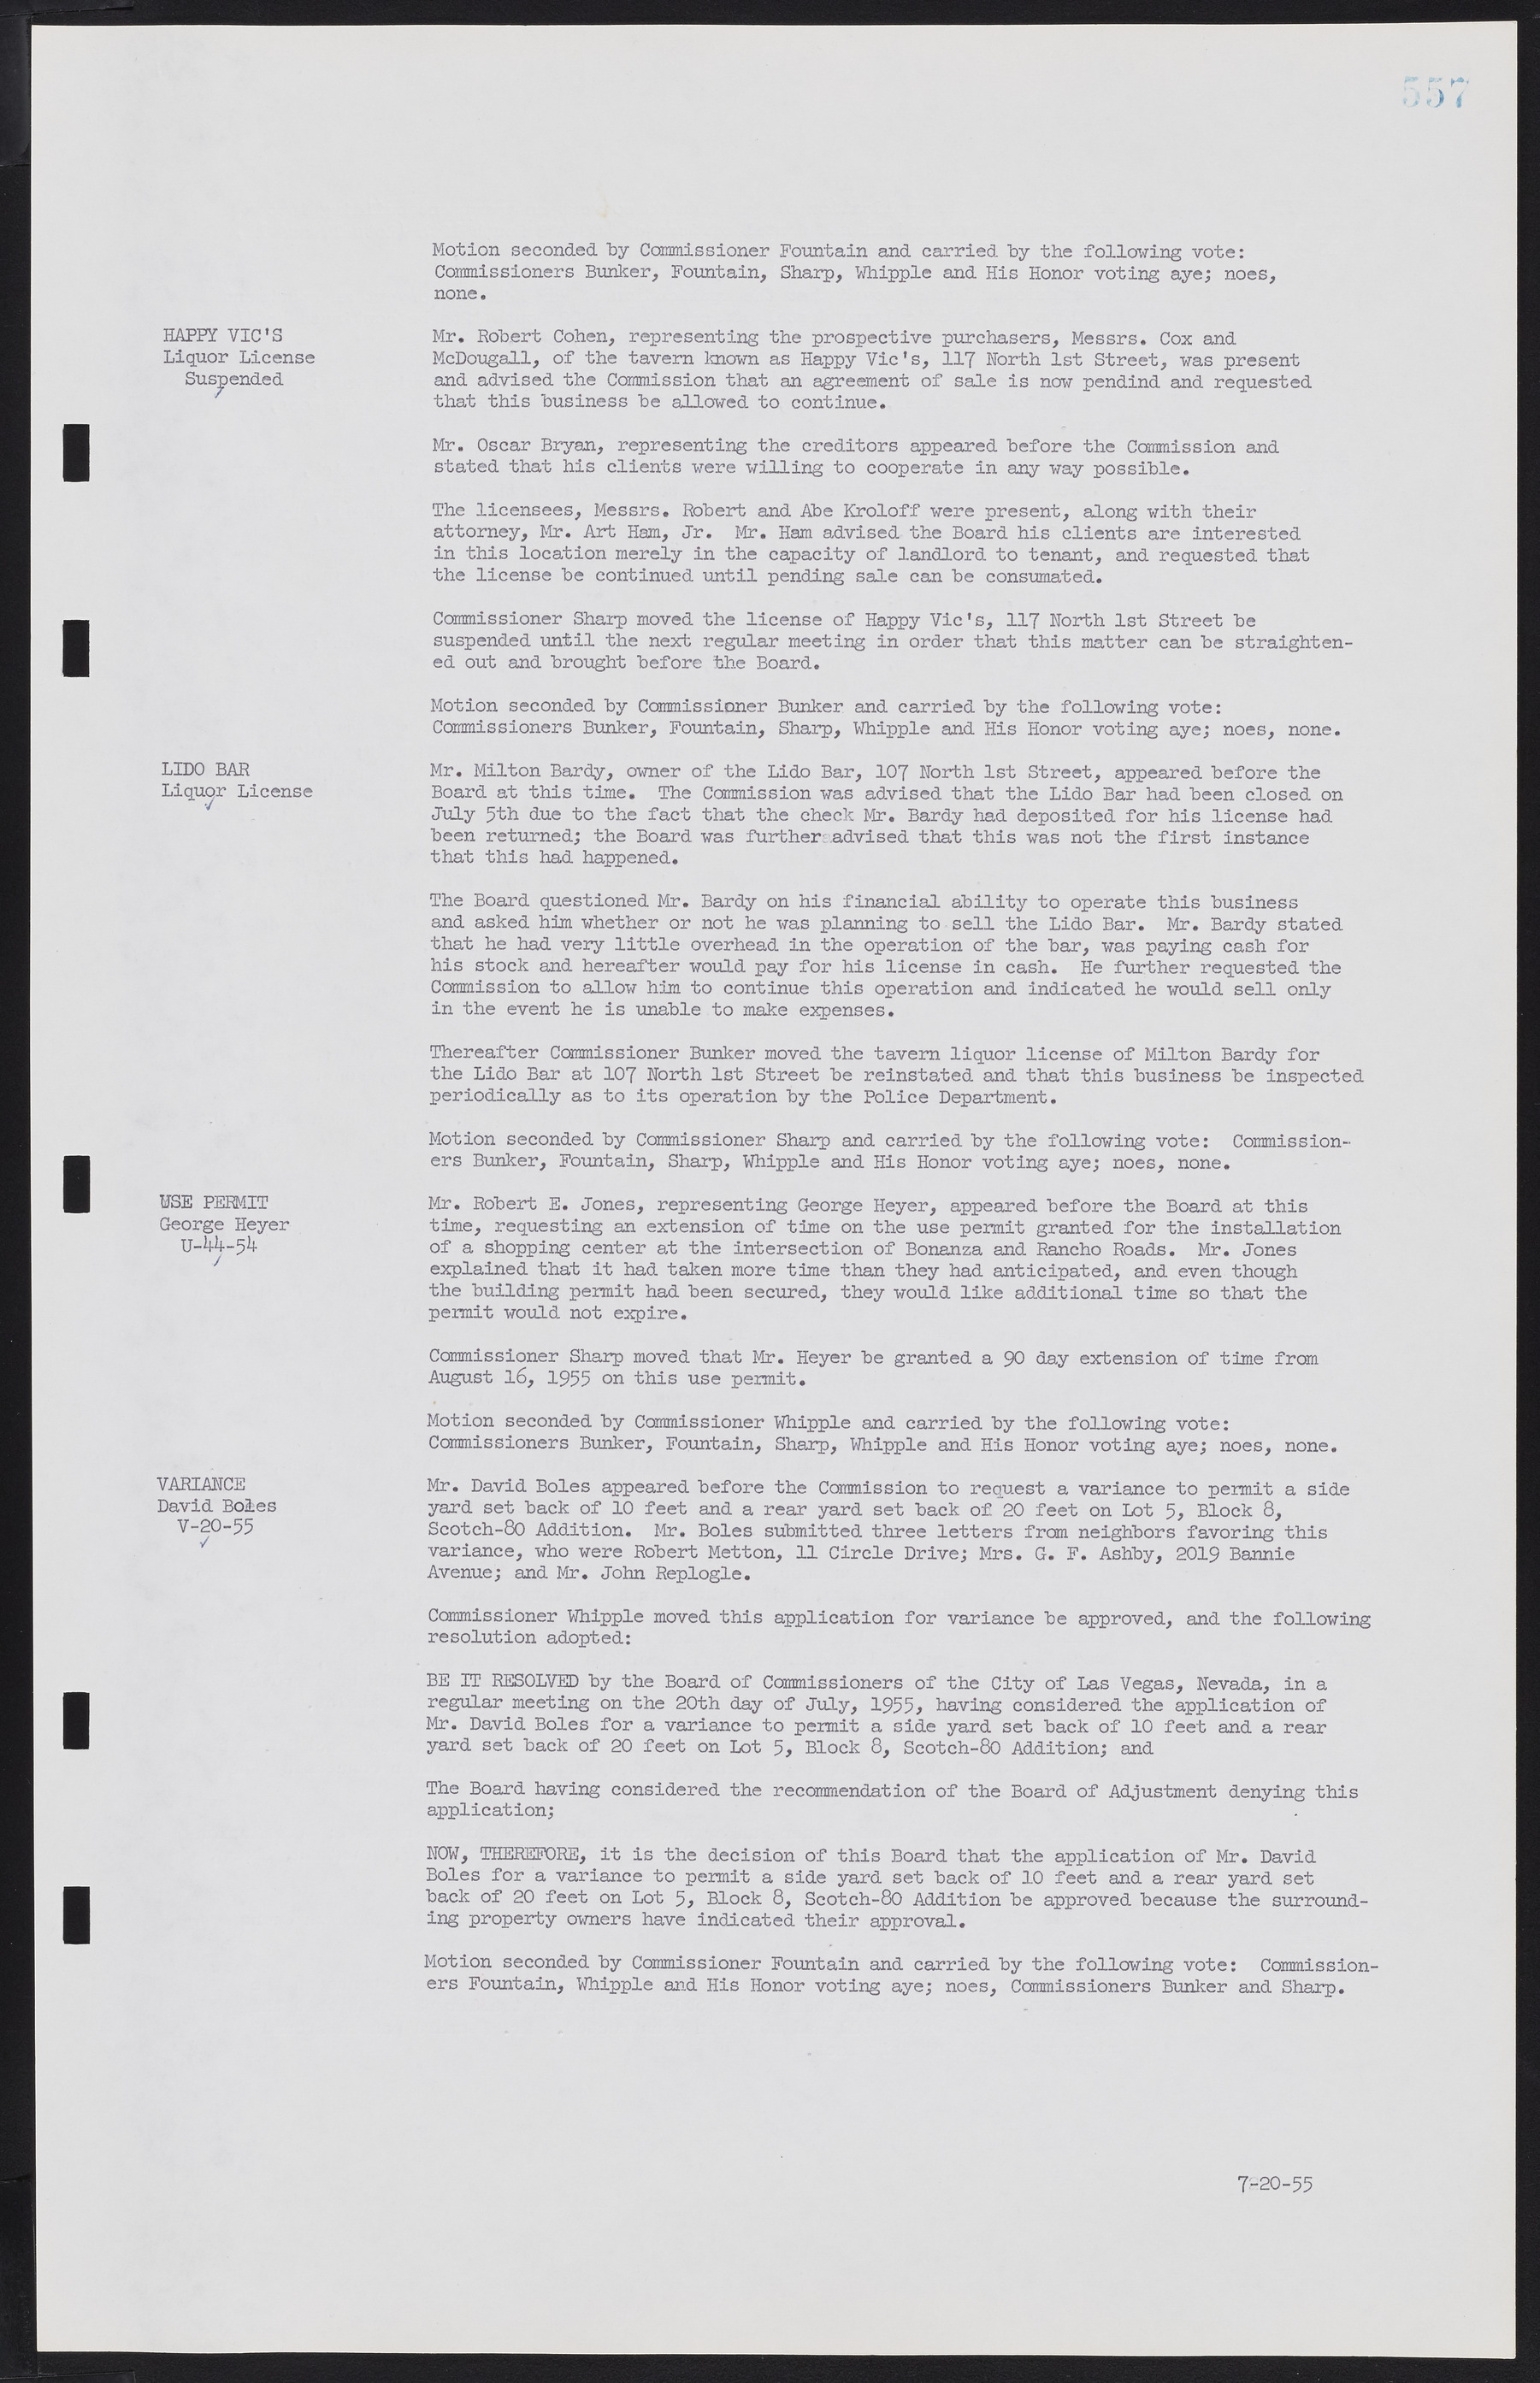 Las Vegas City Commission Minutes, February 17, 1954 to September 21, 1955, lvc000009-563